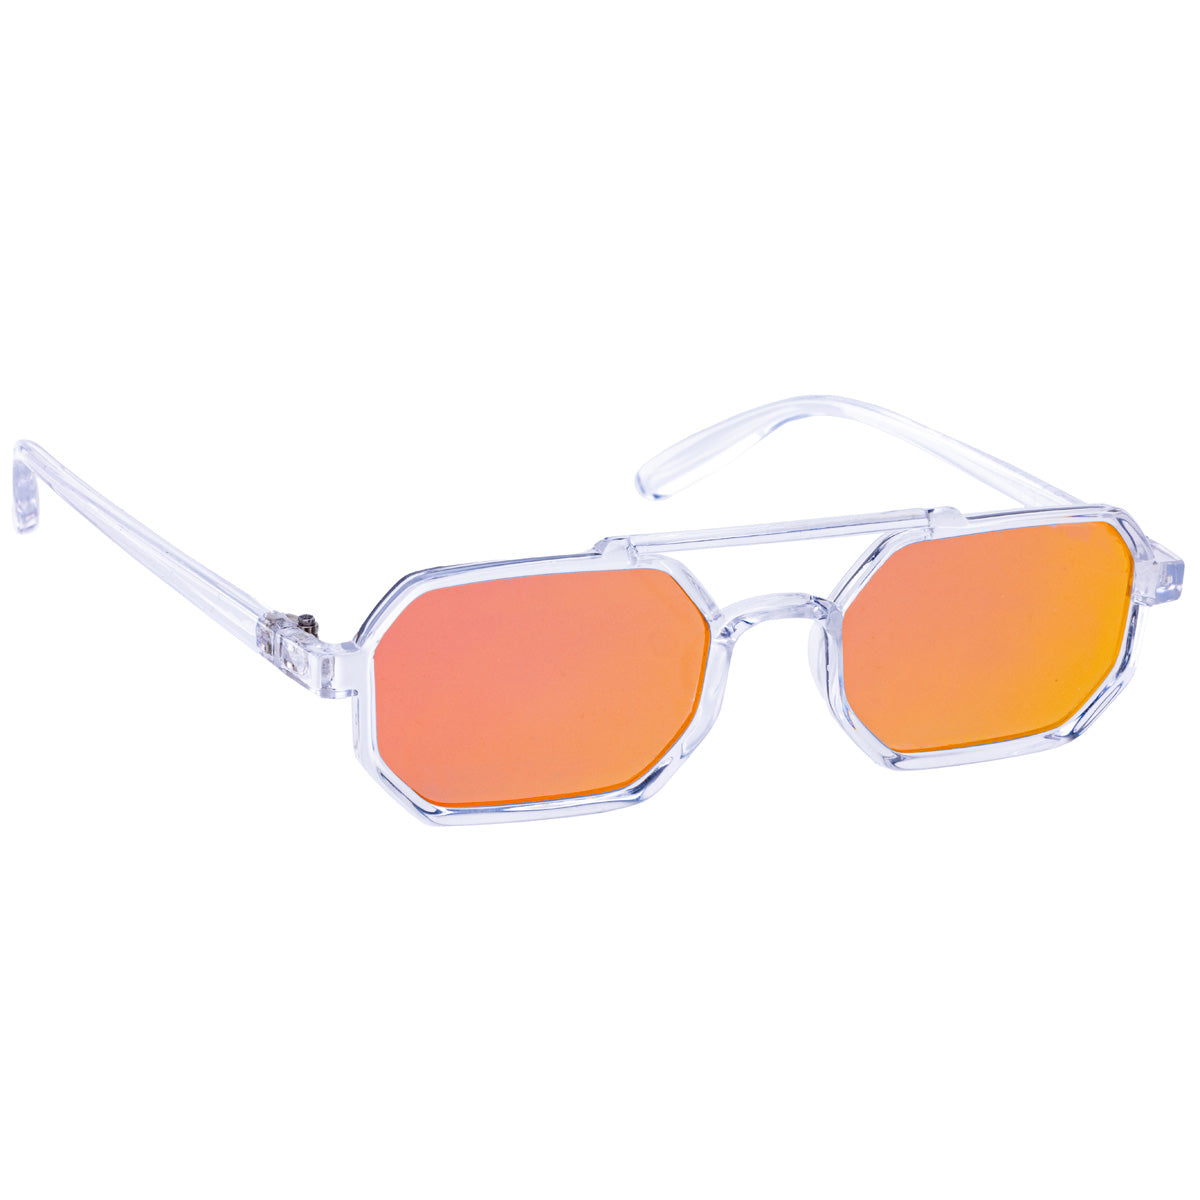 Angled rectangular sunglasses mirror lenses